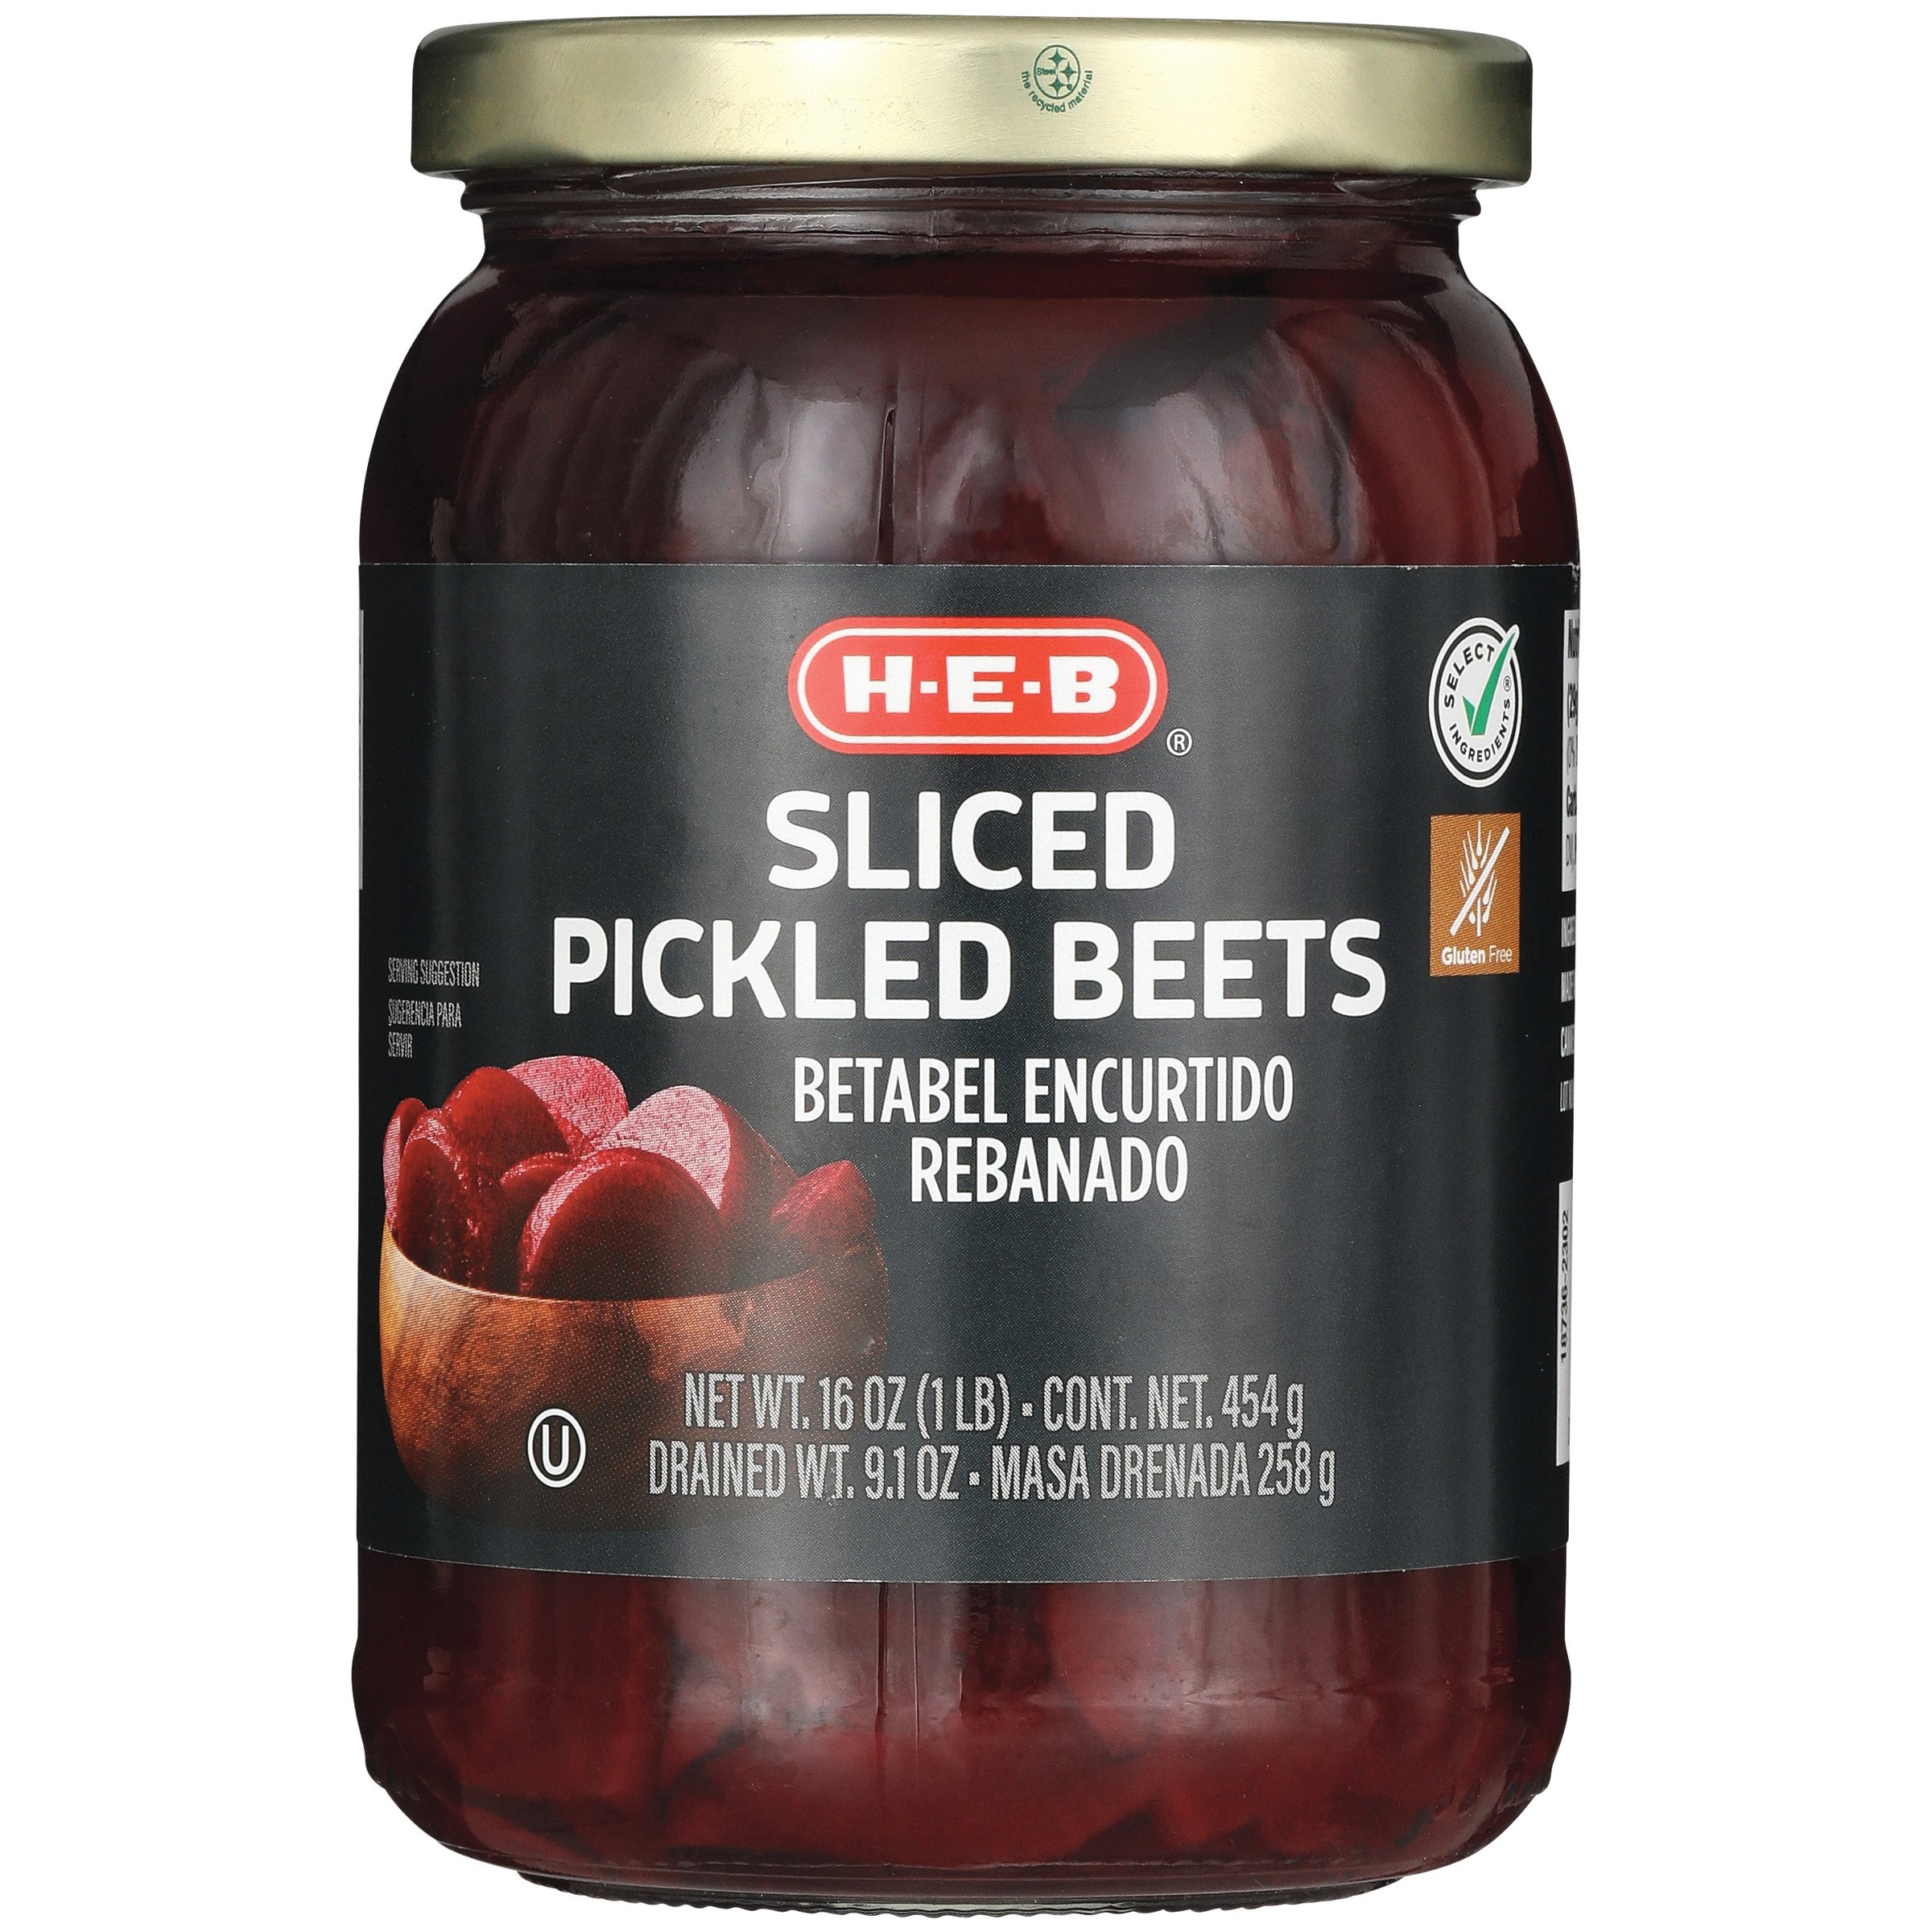 H-E-B Sliced Pickled Beets - Shop Vegetables at H-E-B